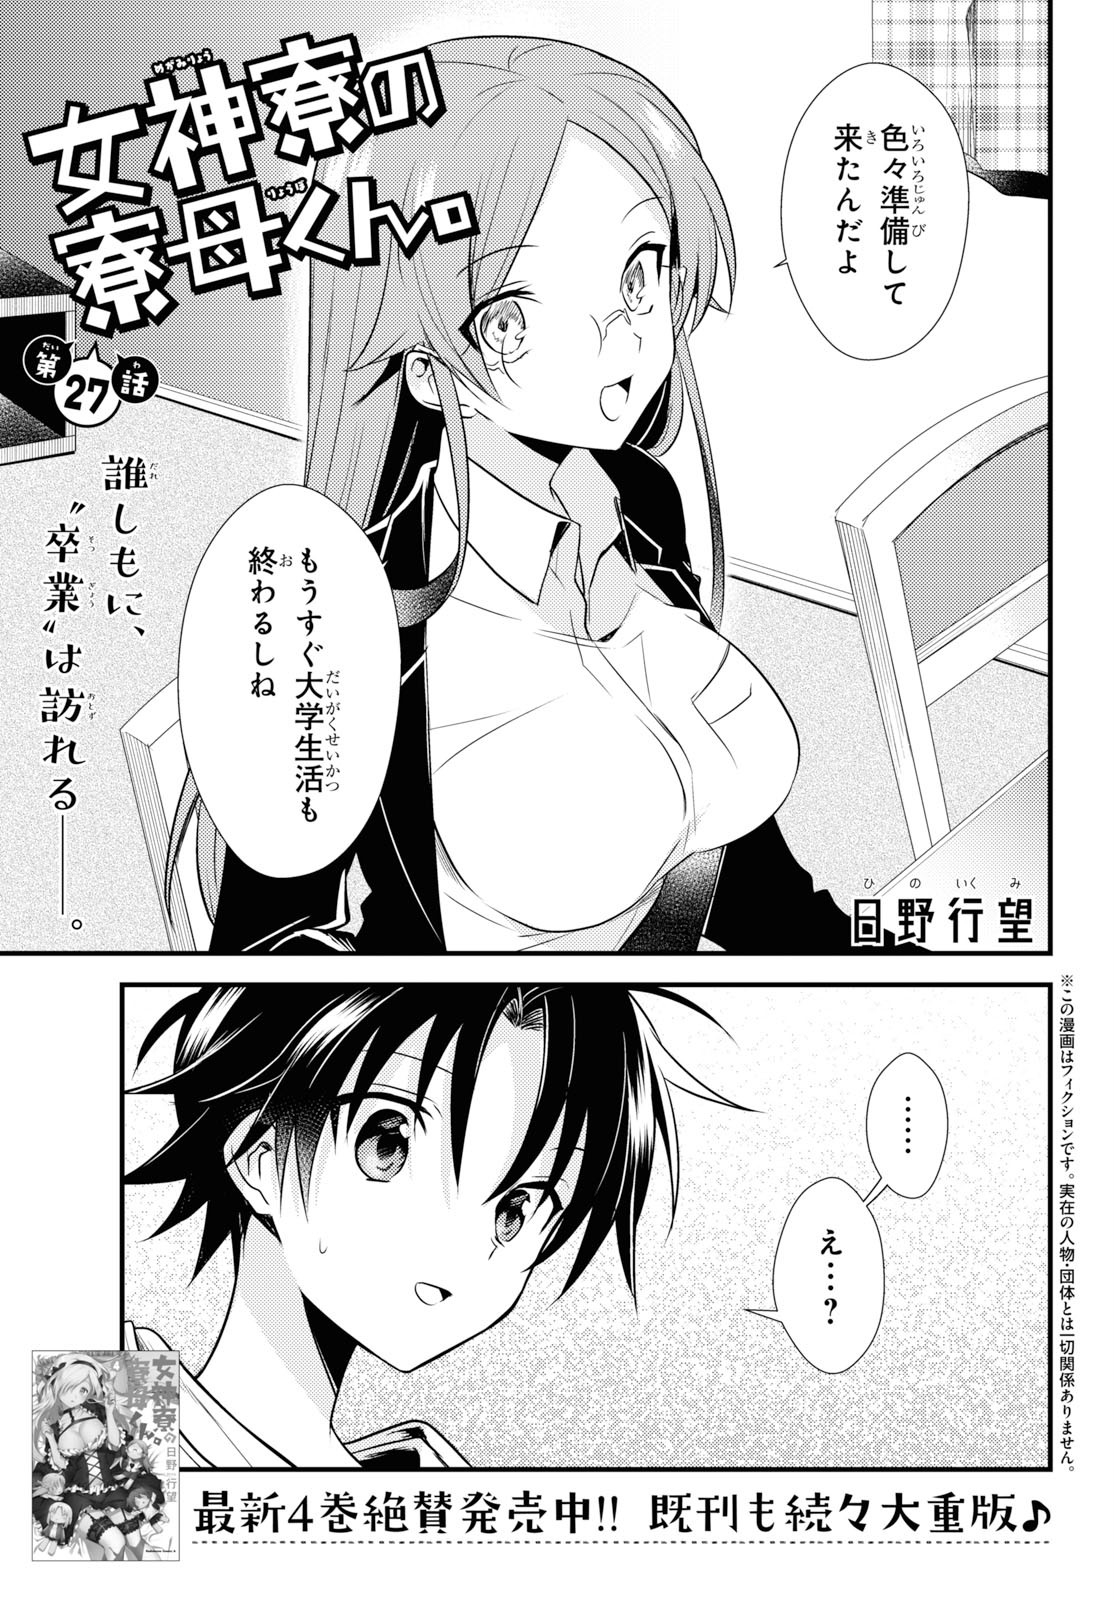 Megami-ryou no Ryoubo-kun - Chapter 27 - Page 1